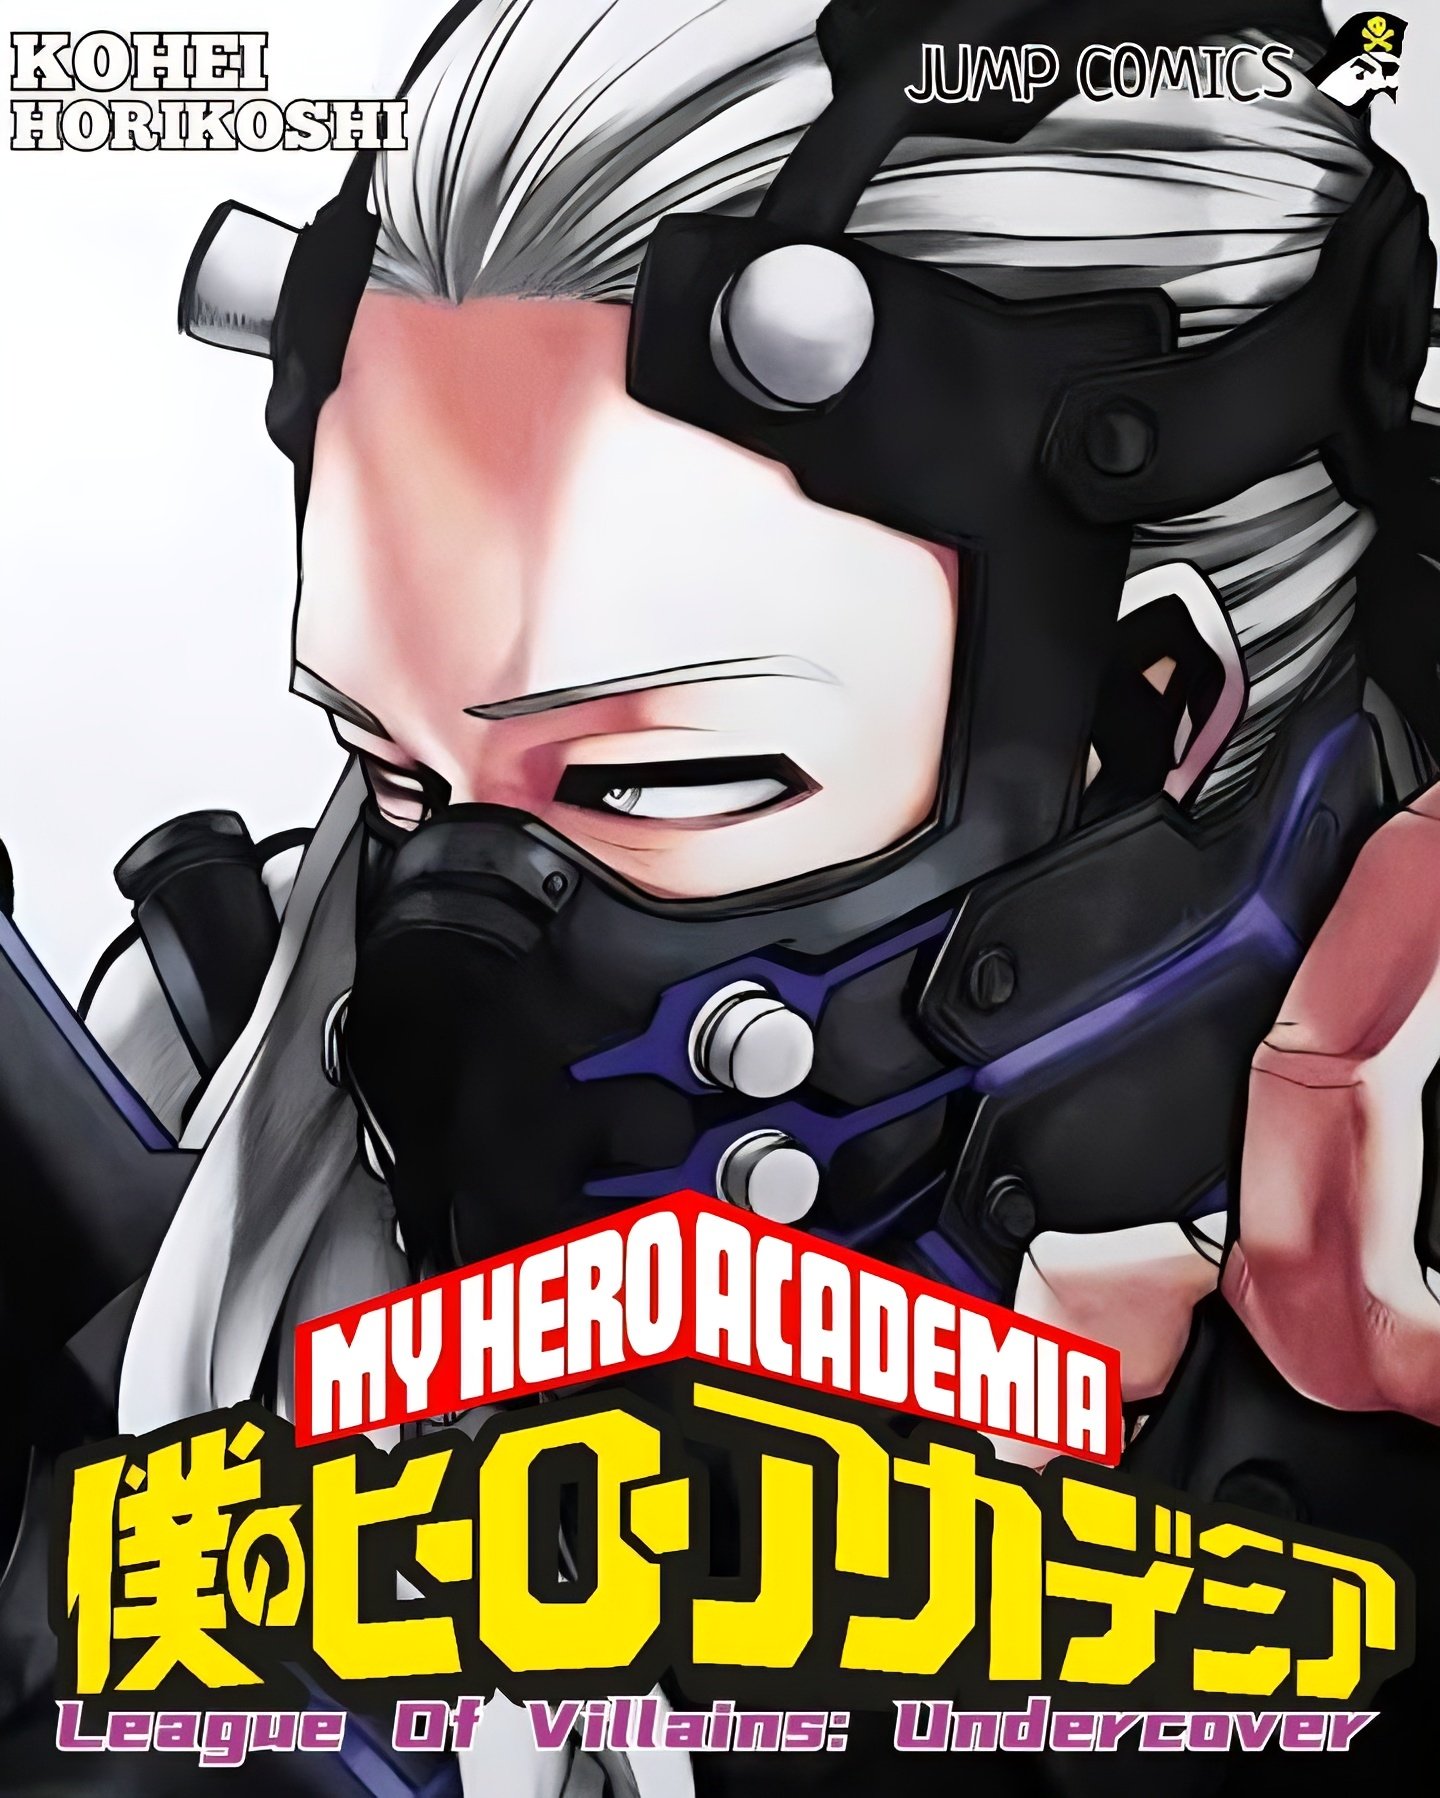 My Hero Academia: O Poderoso Mundo dos Heróis